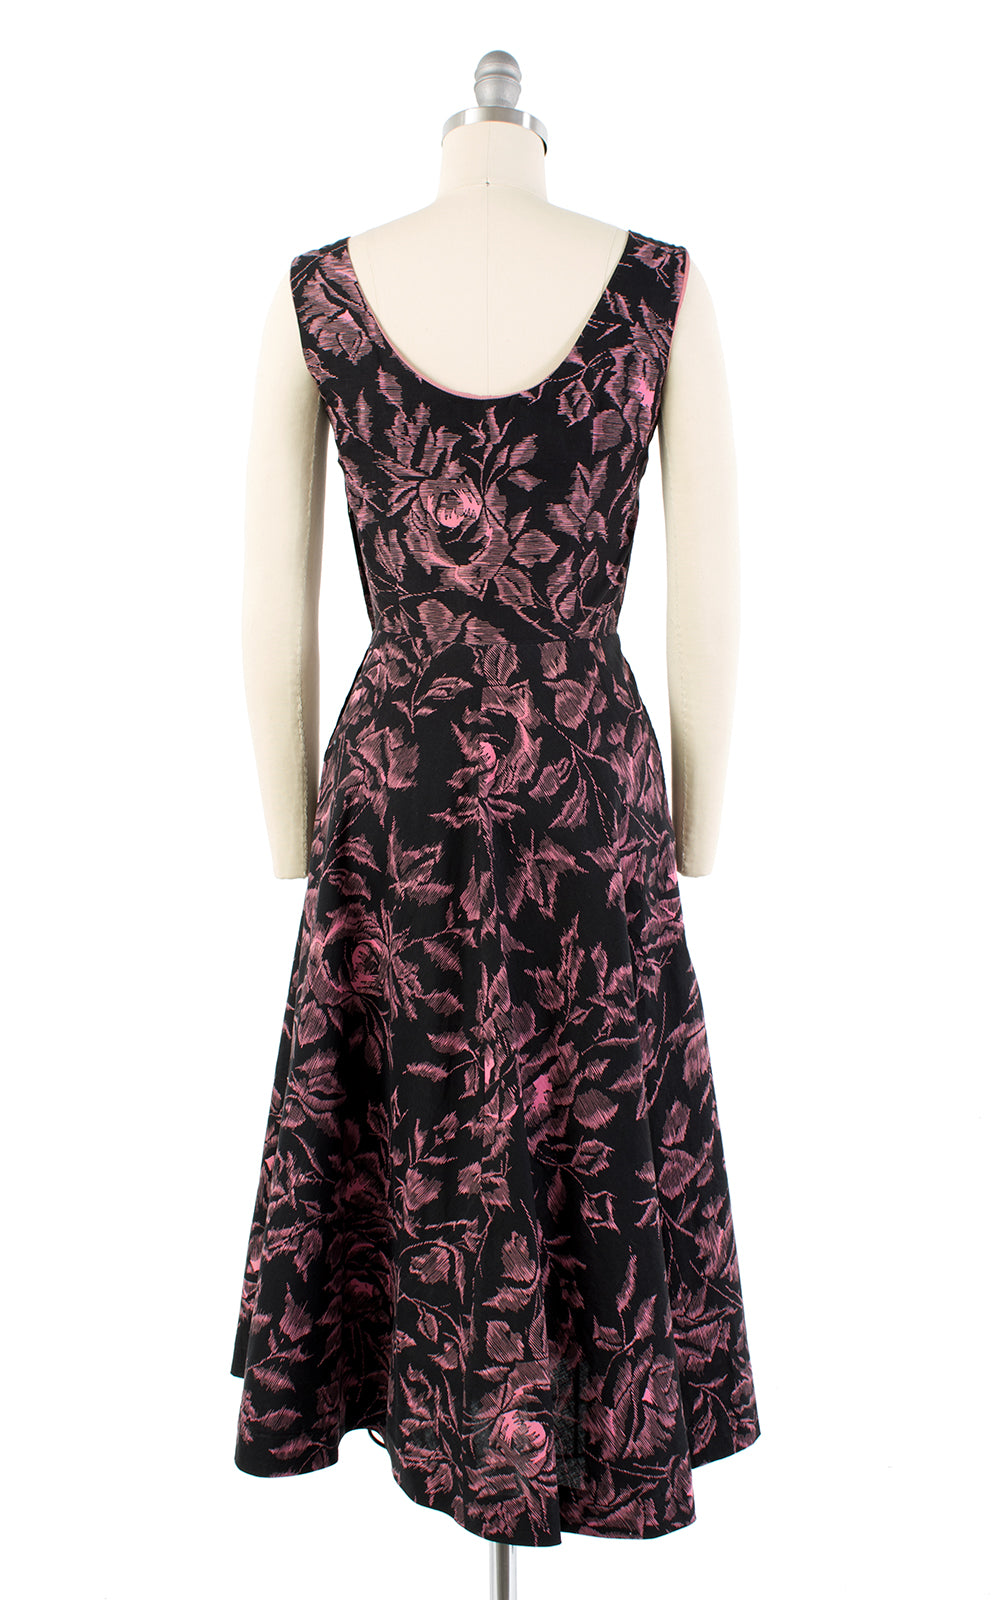 $65 DRESS SALE /// 1950s Rose Print Appliqué Rhinestones Black Cotton Sundress | x-small